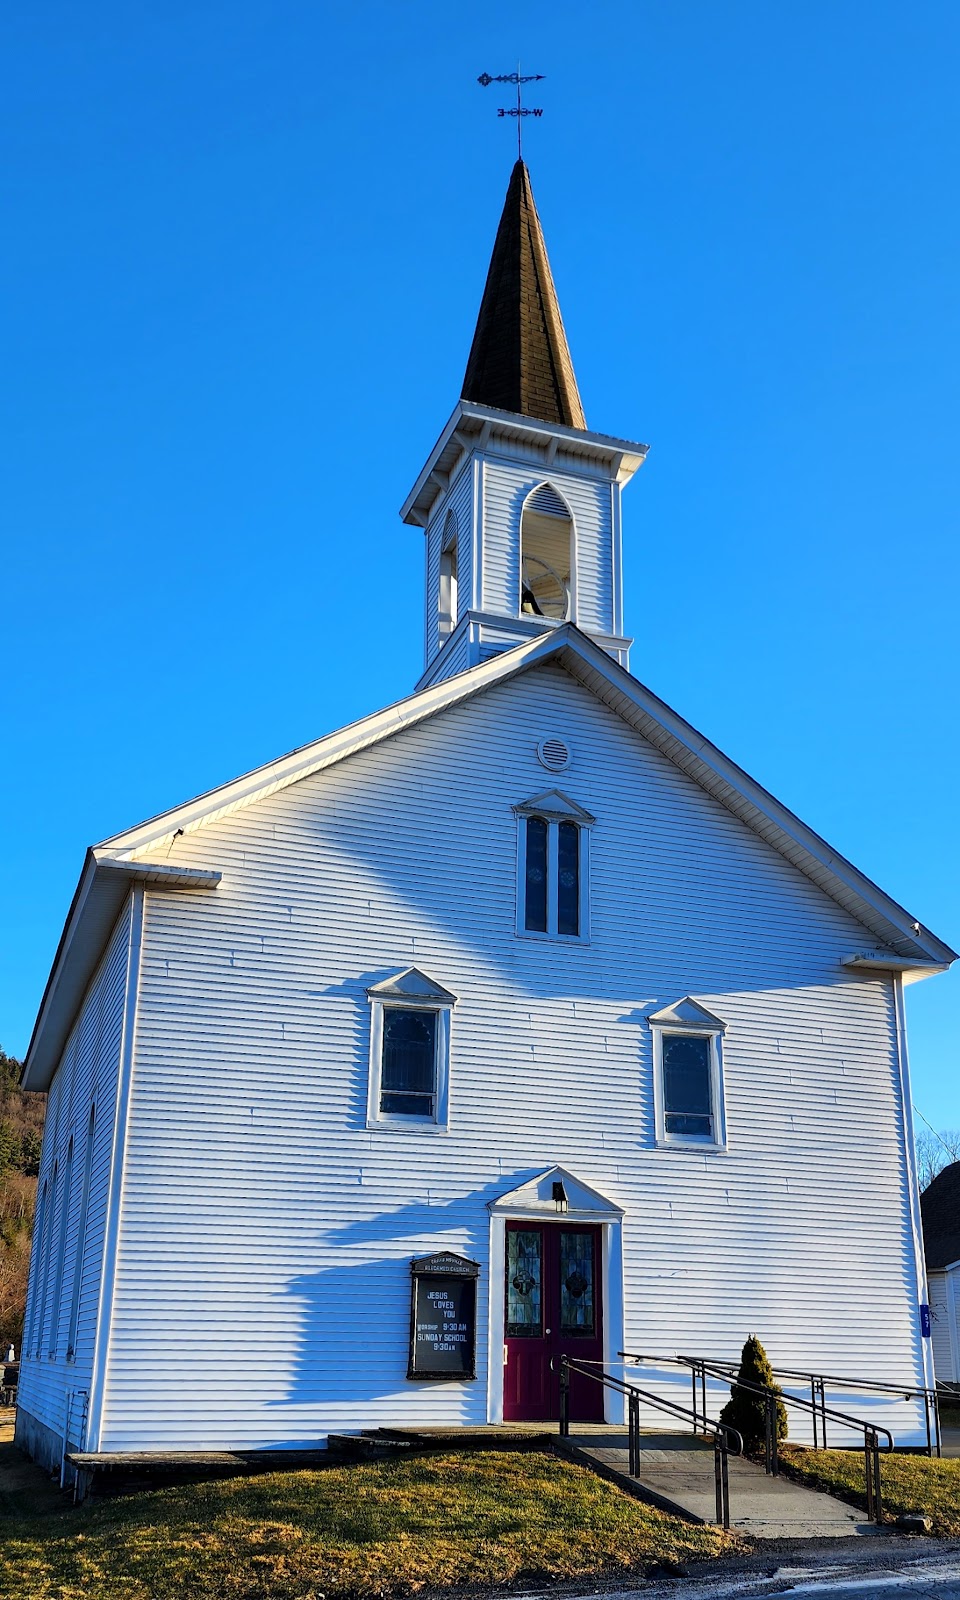 Grahamsville Reformed Church | State Rte 55, Grahamsville, NY 12740 | Phone: (845) 985-7480